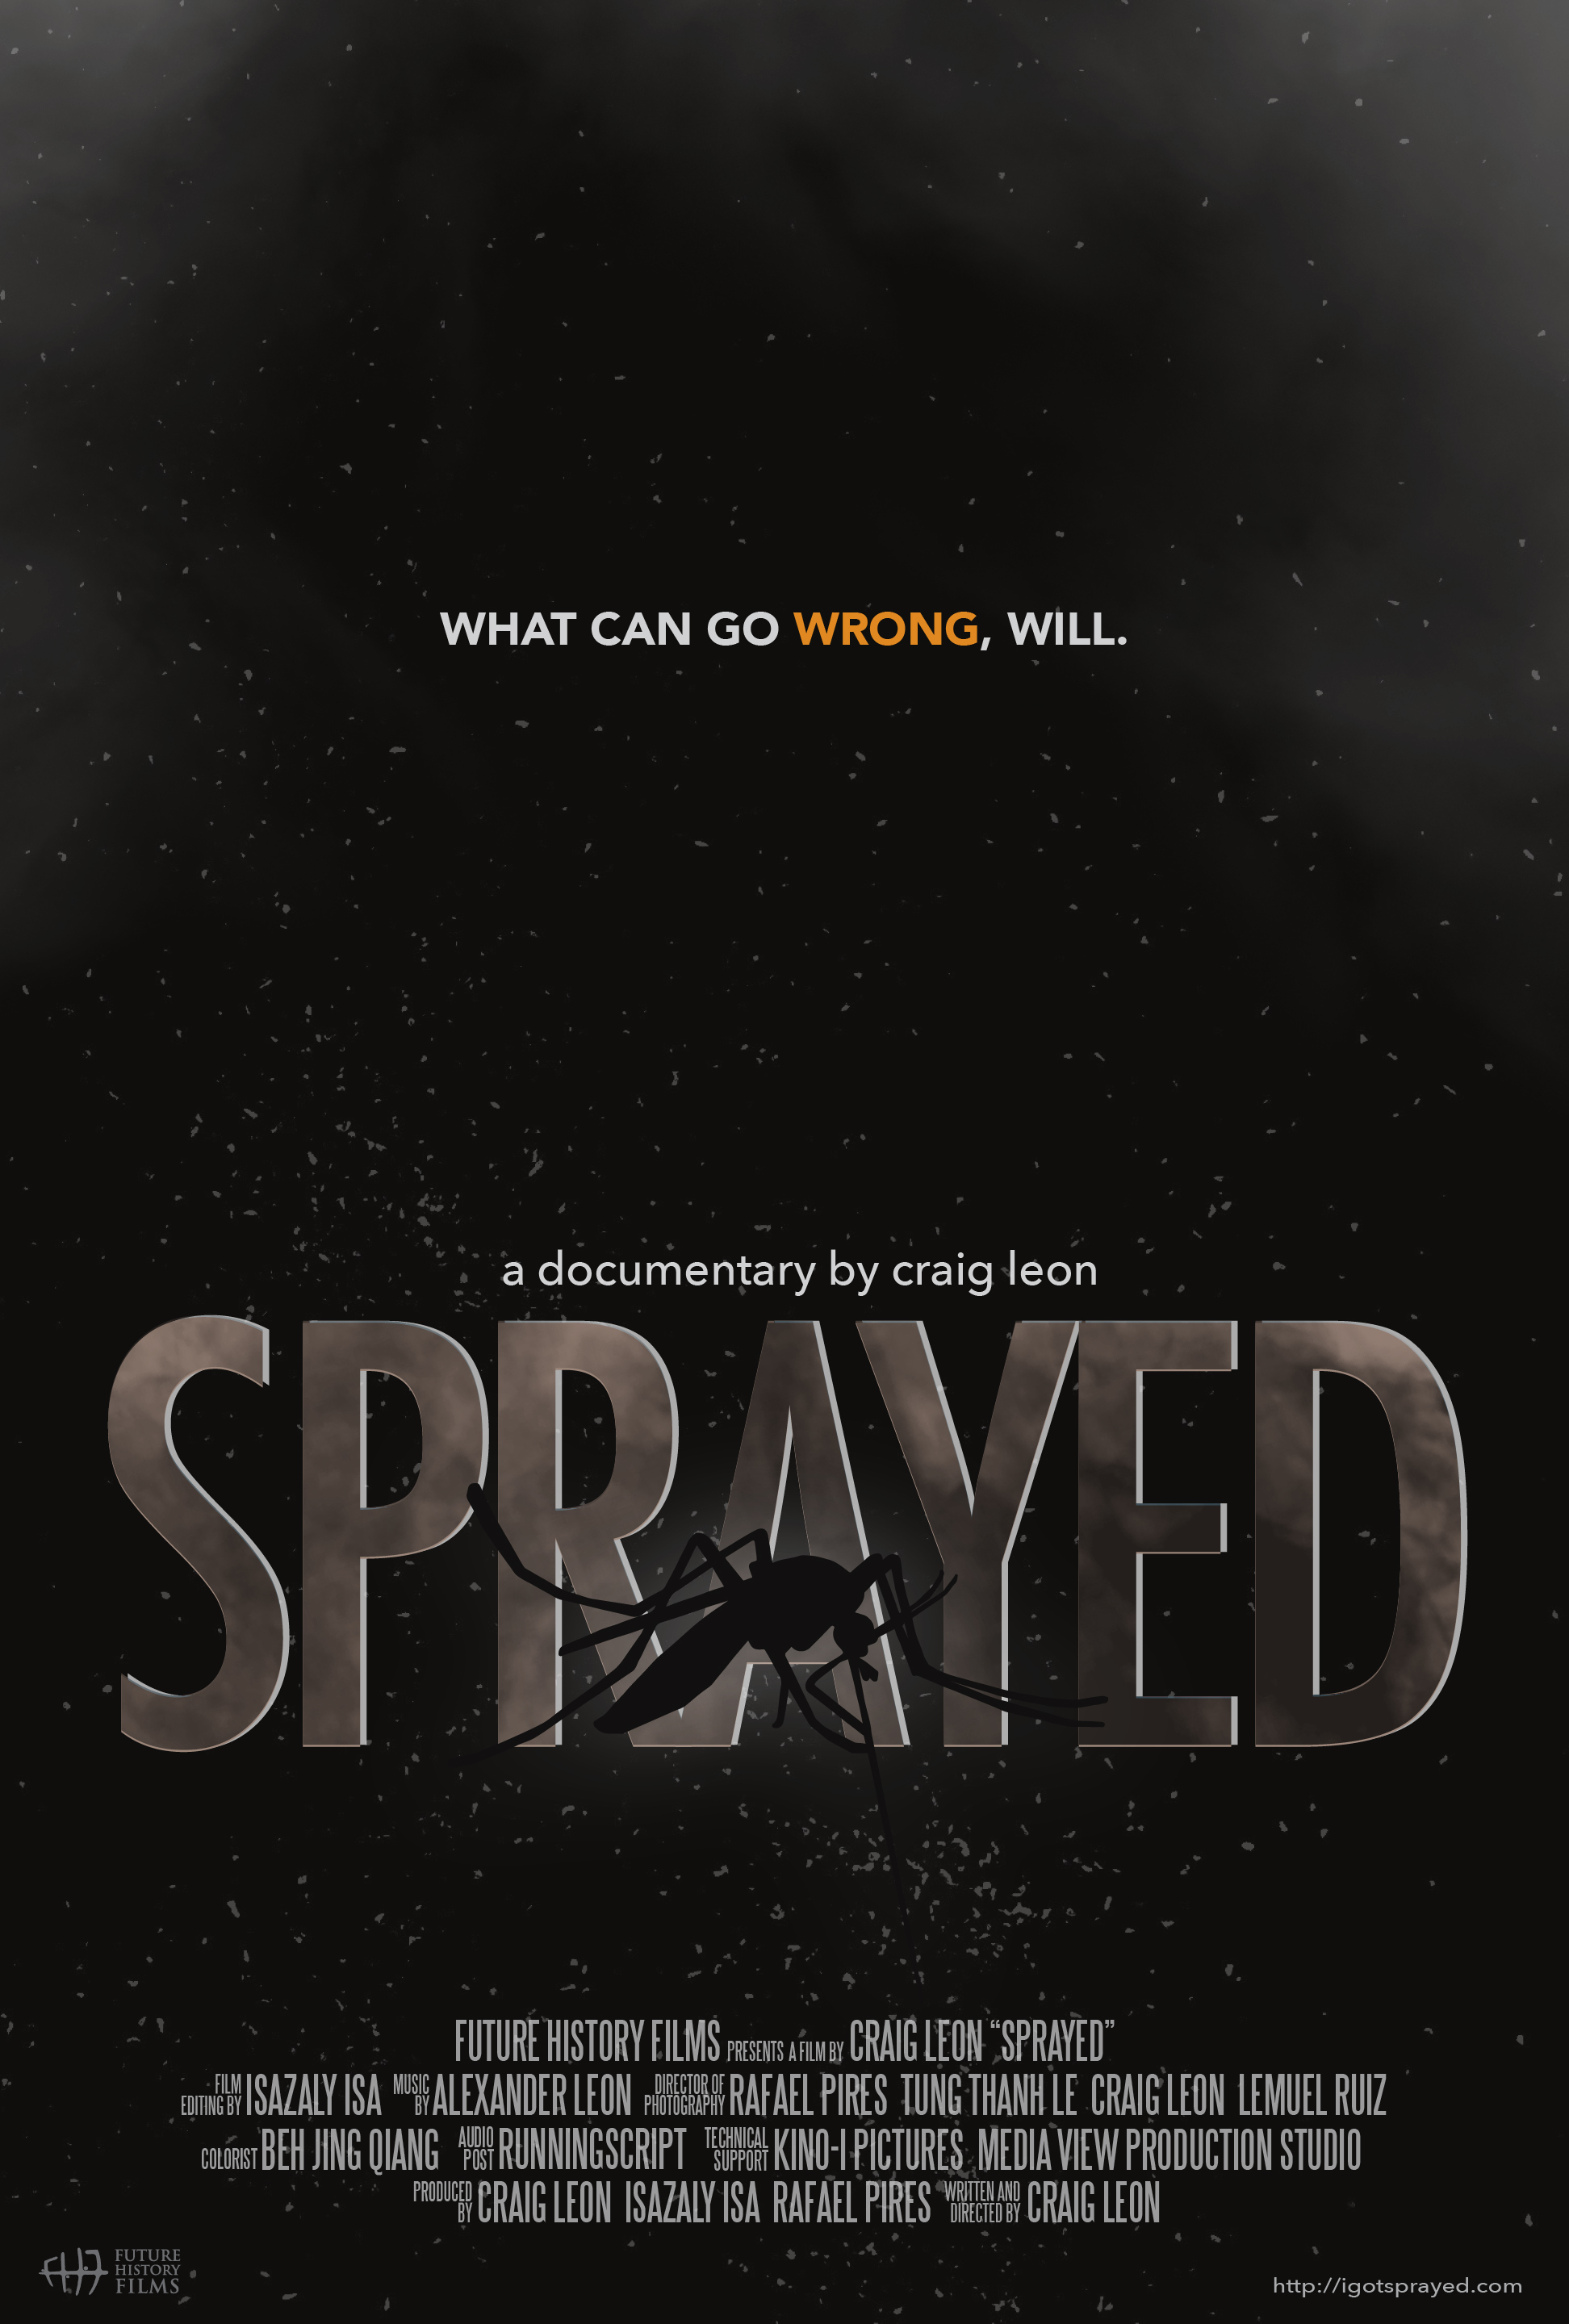 Nonton film Sprayed layarkaca21 indoxx1 ganool online streaming terbaru